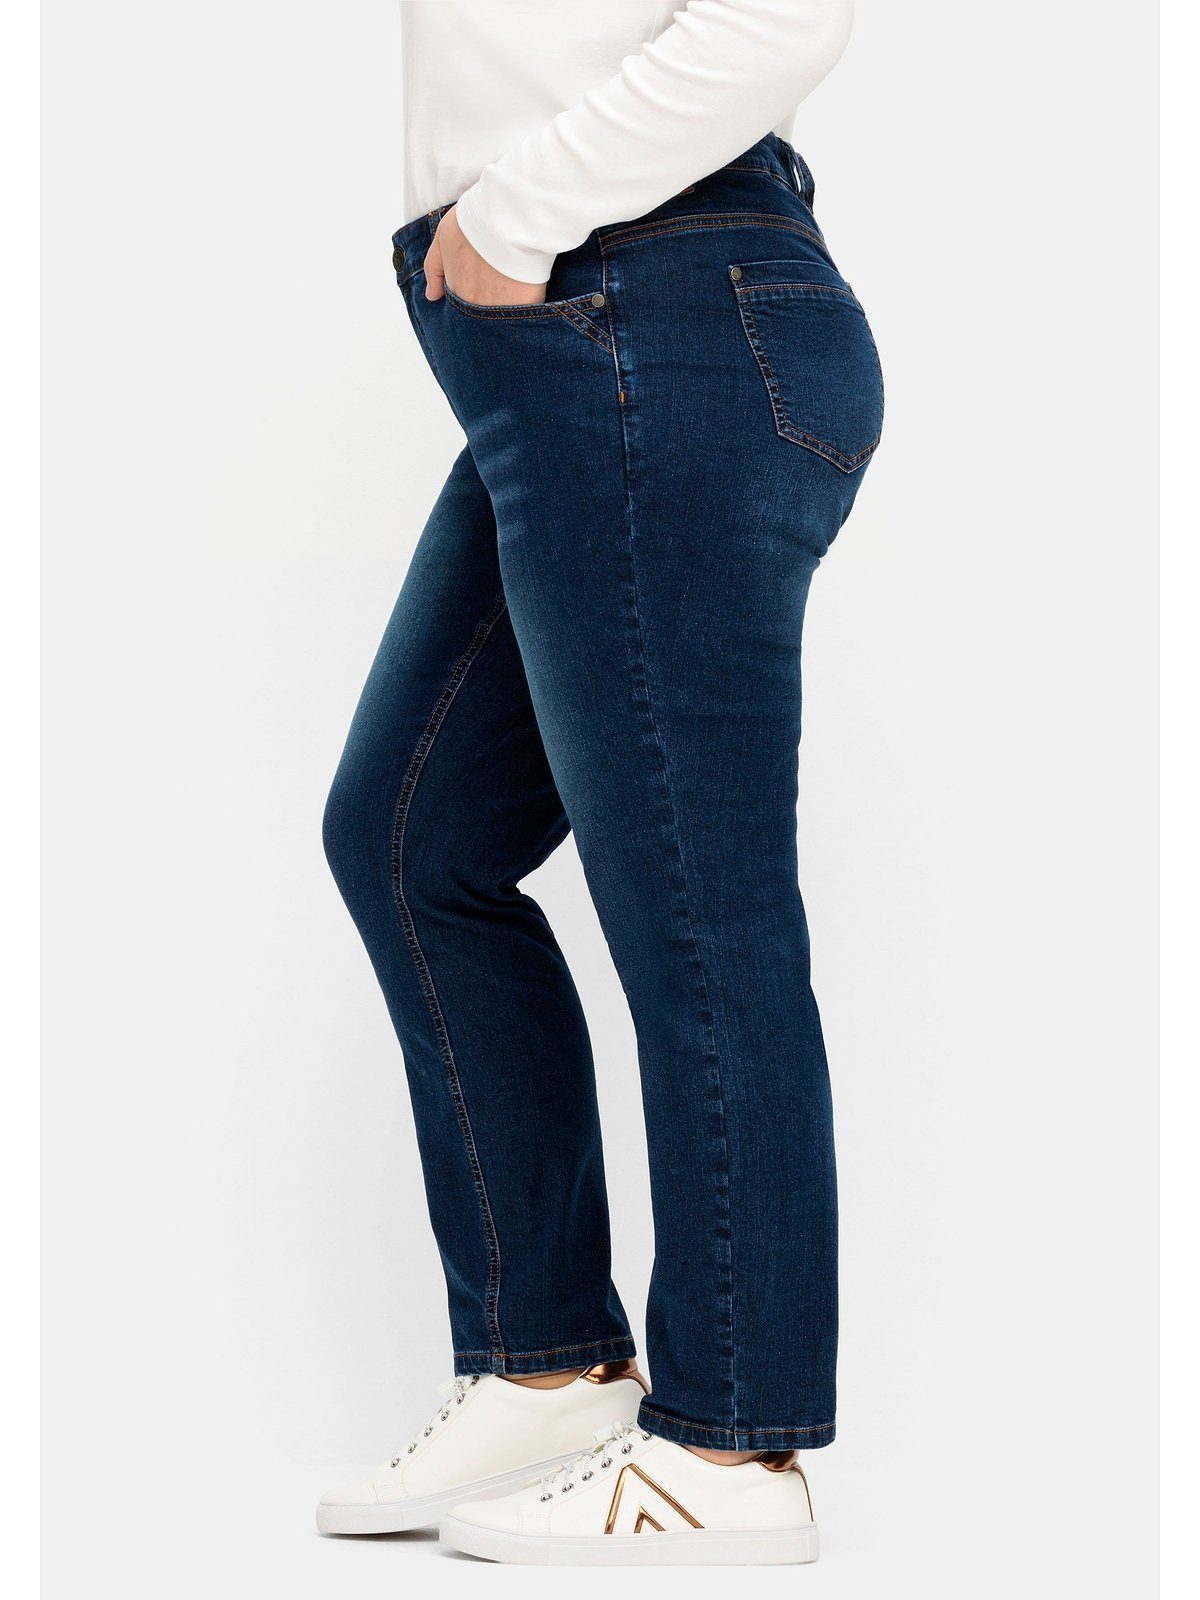 Sheego Stretch-Jeans Große Größen Denim Five-Pocket-Stil dark blue im